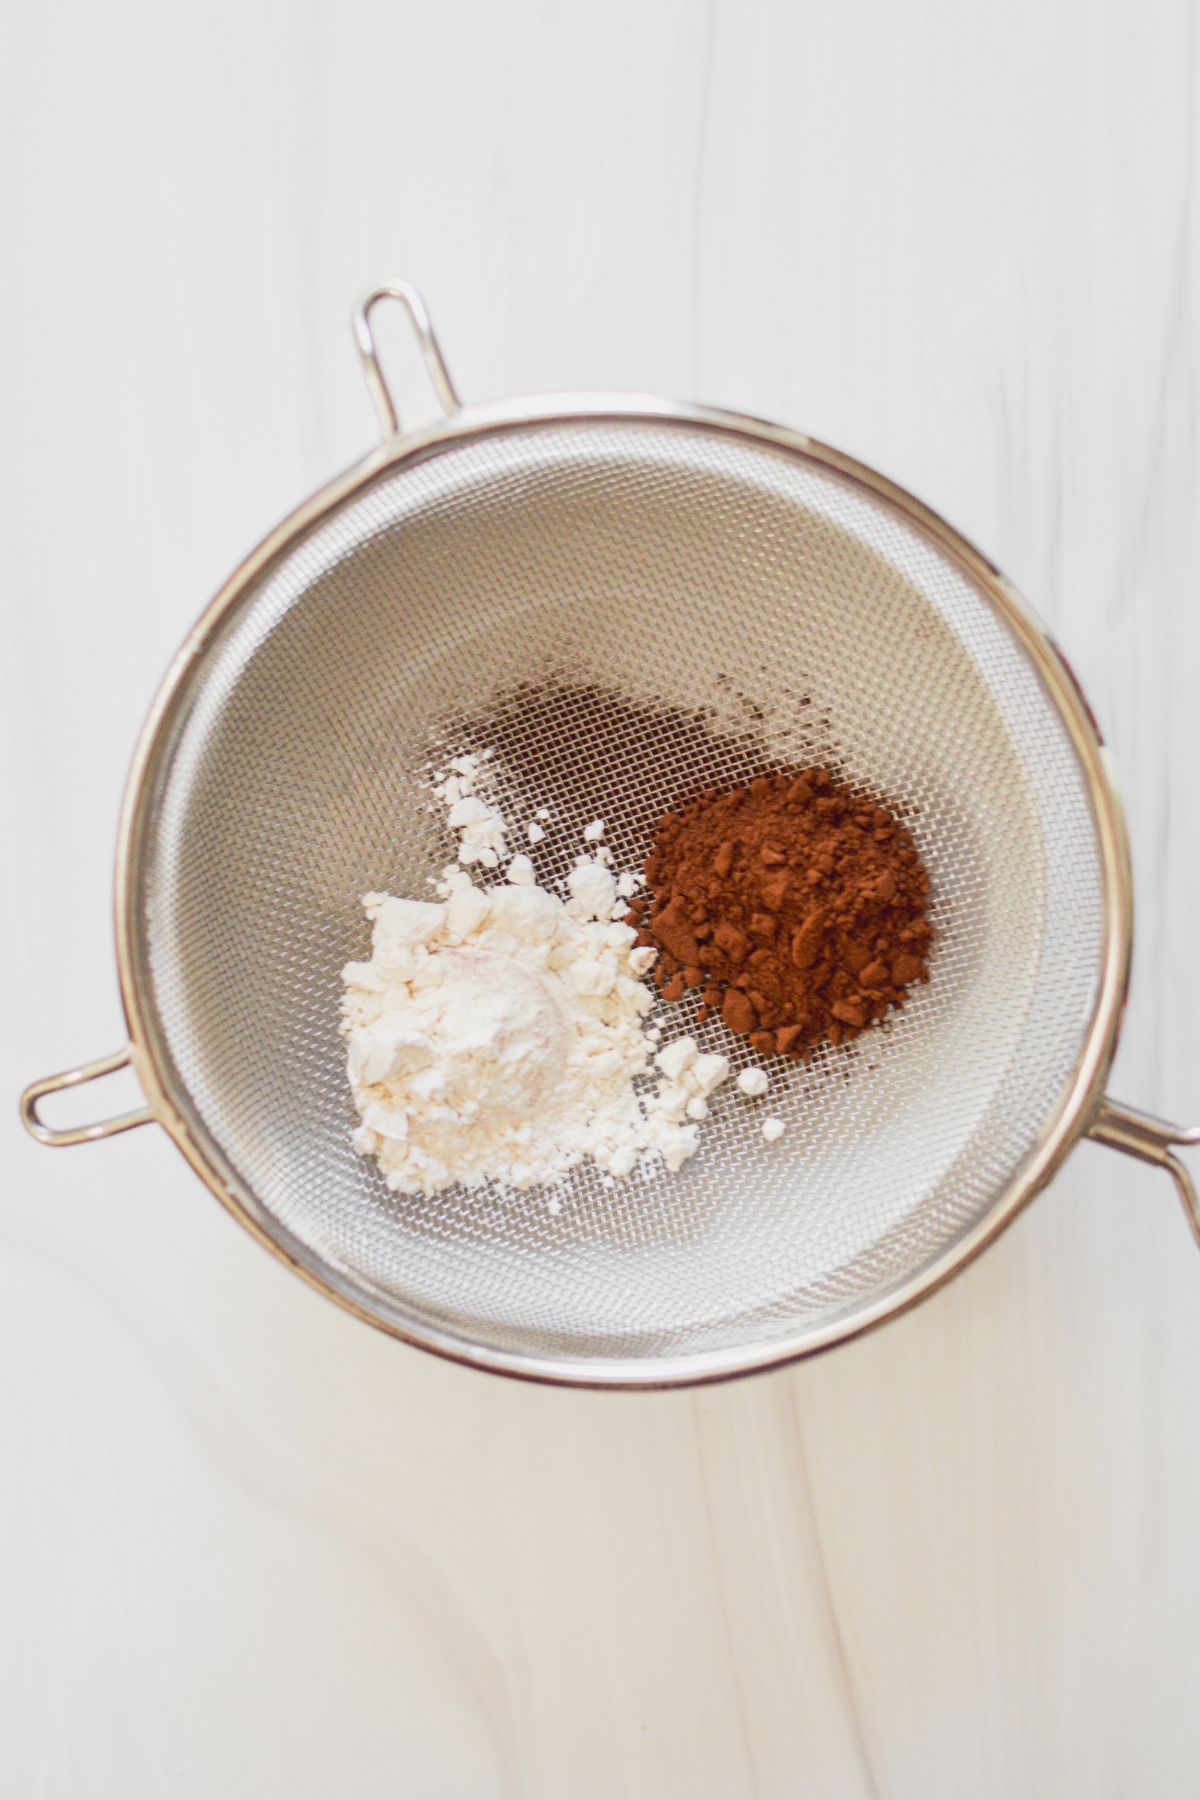 Flour, baking powder, salt and cocoa powder.